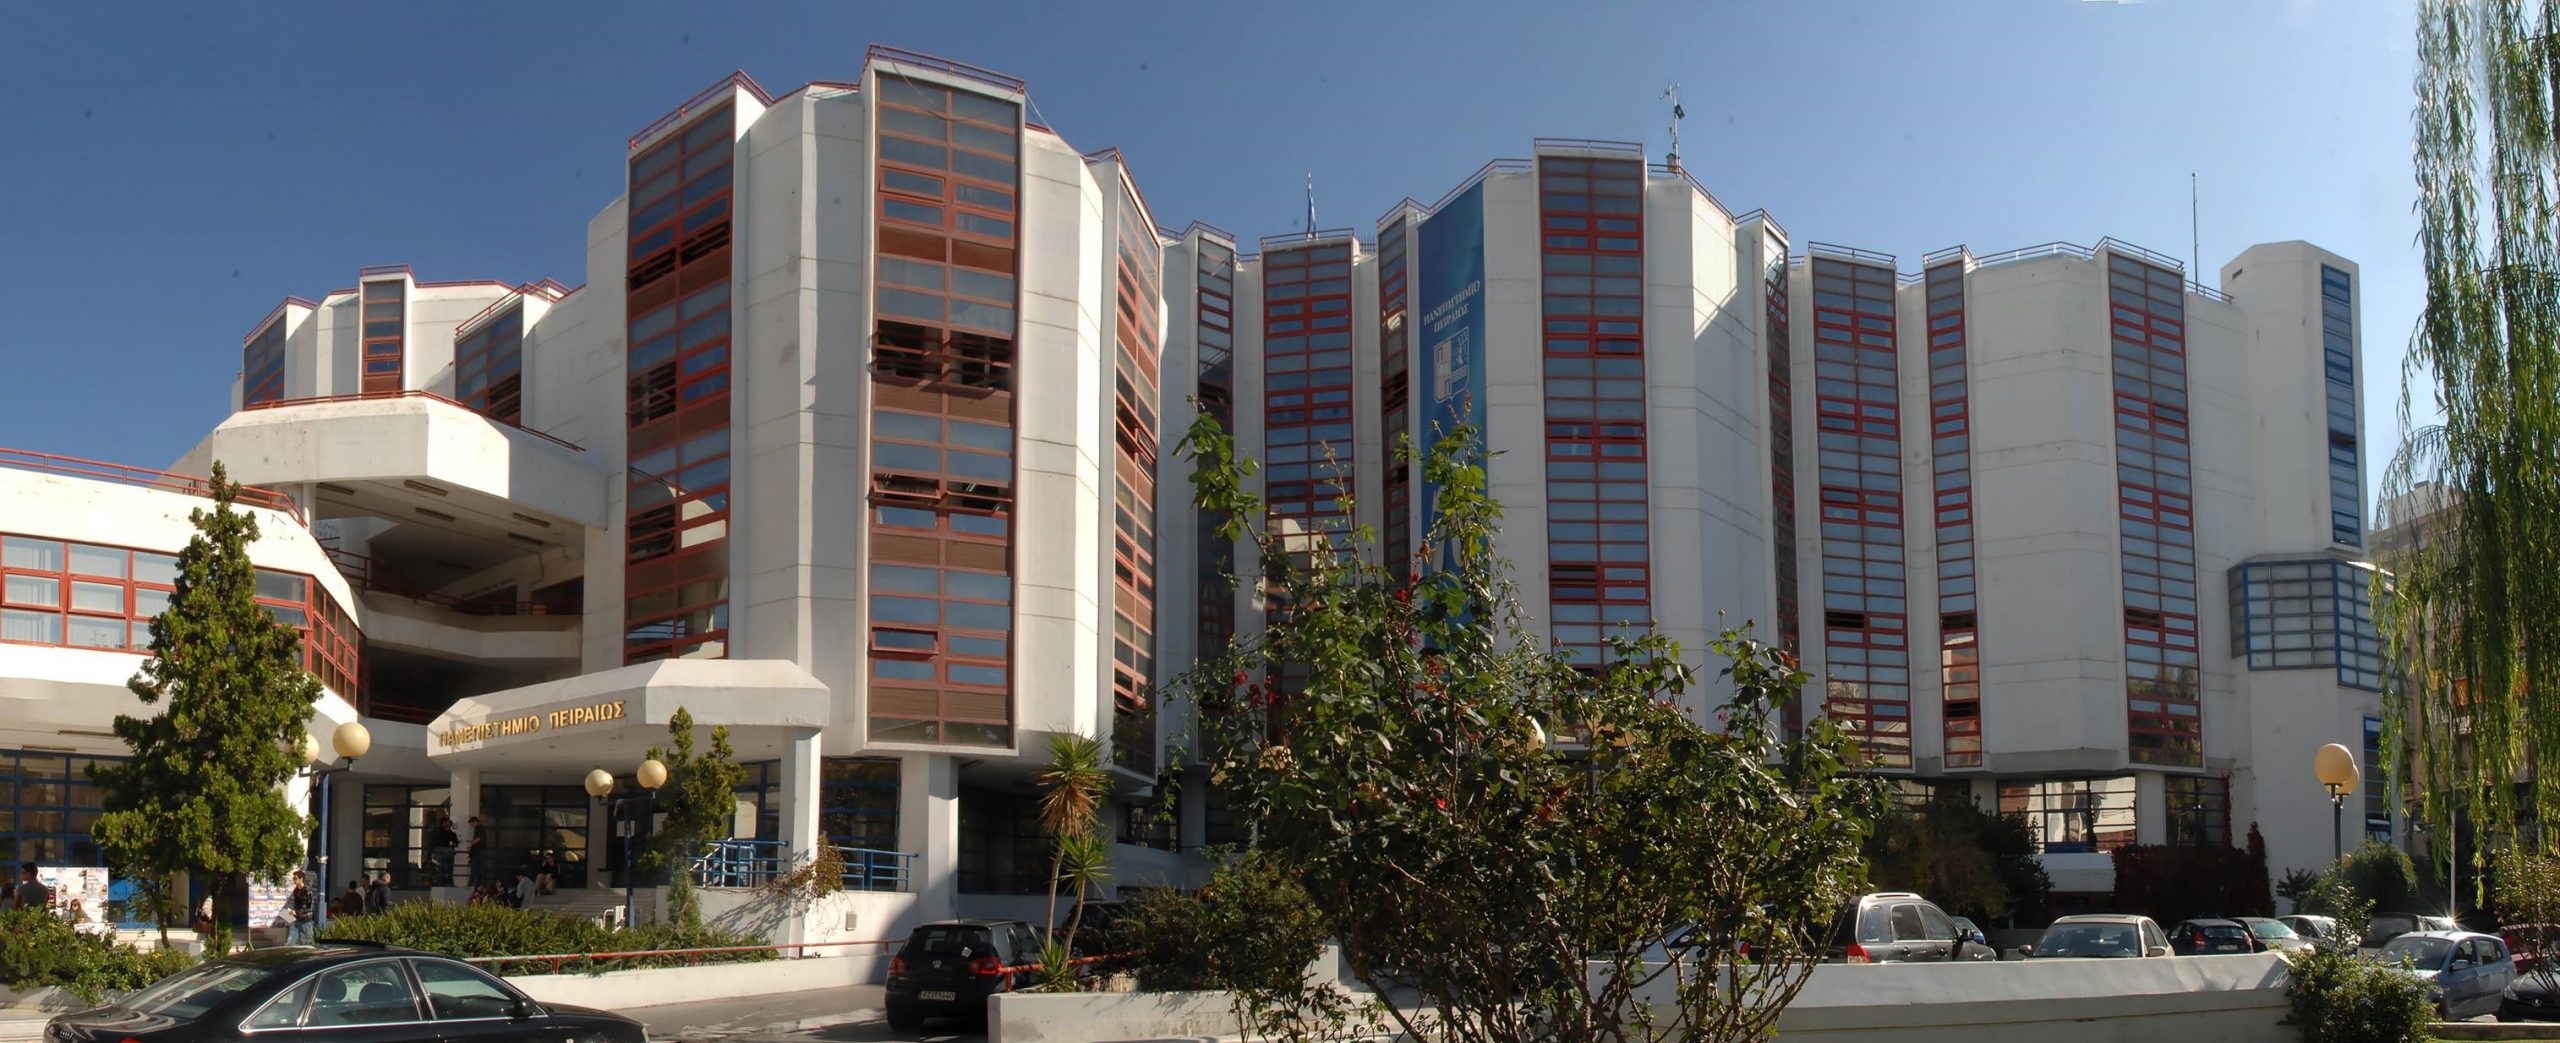 University of Piraeus Main Building